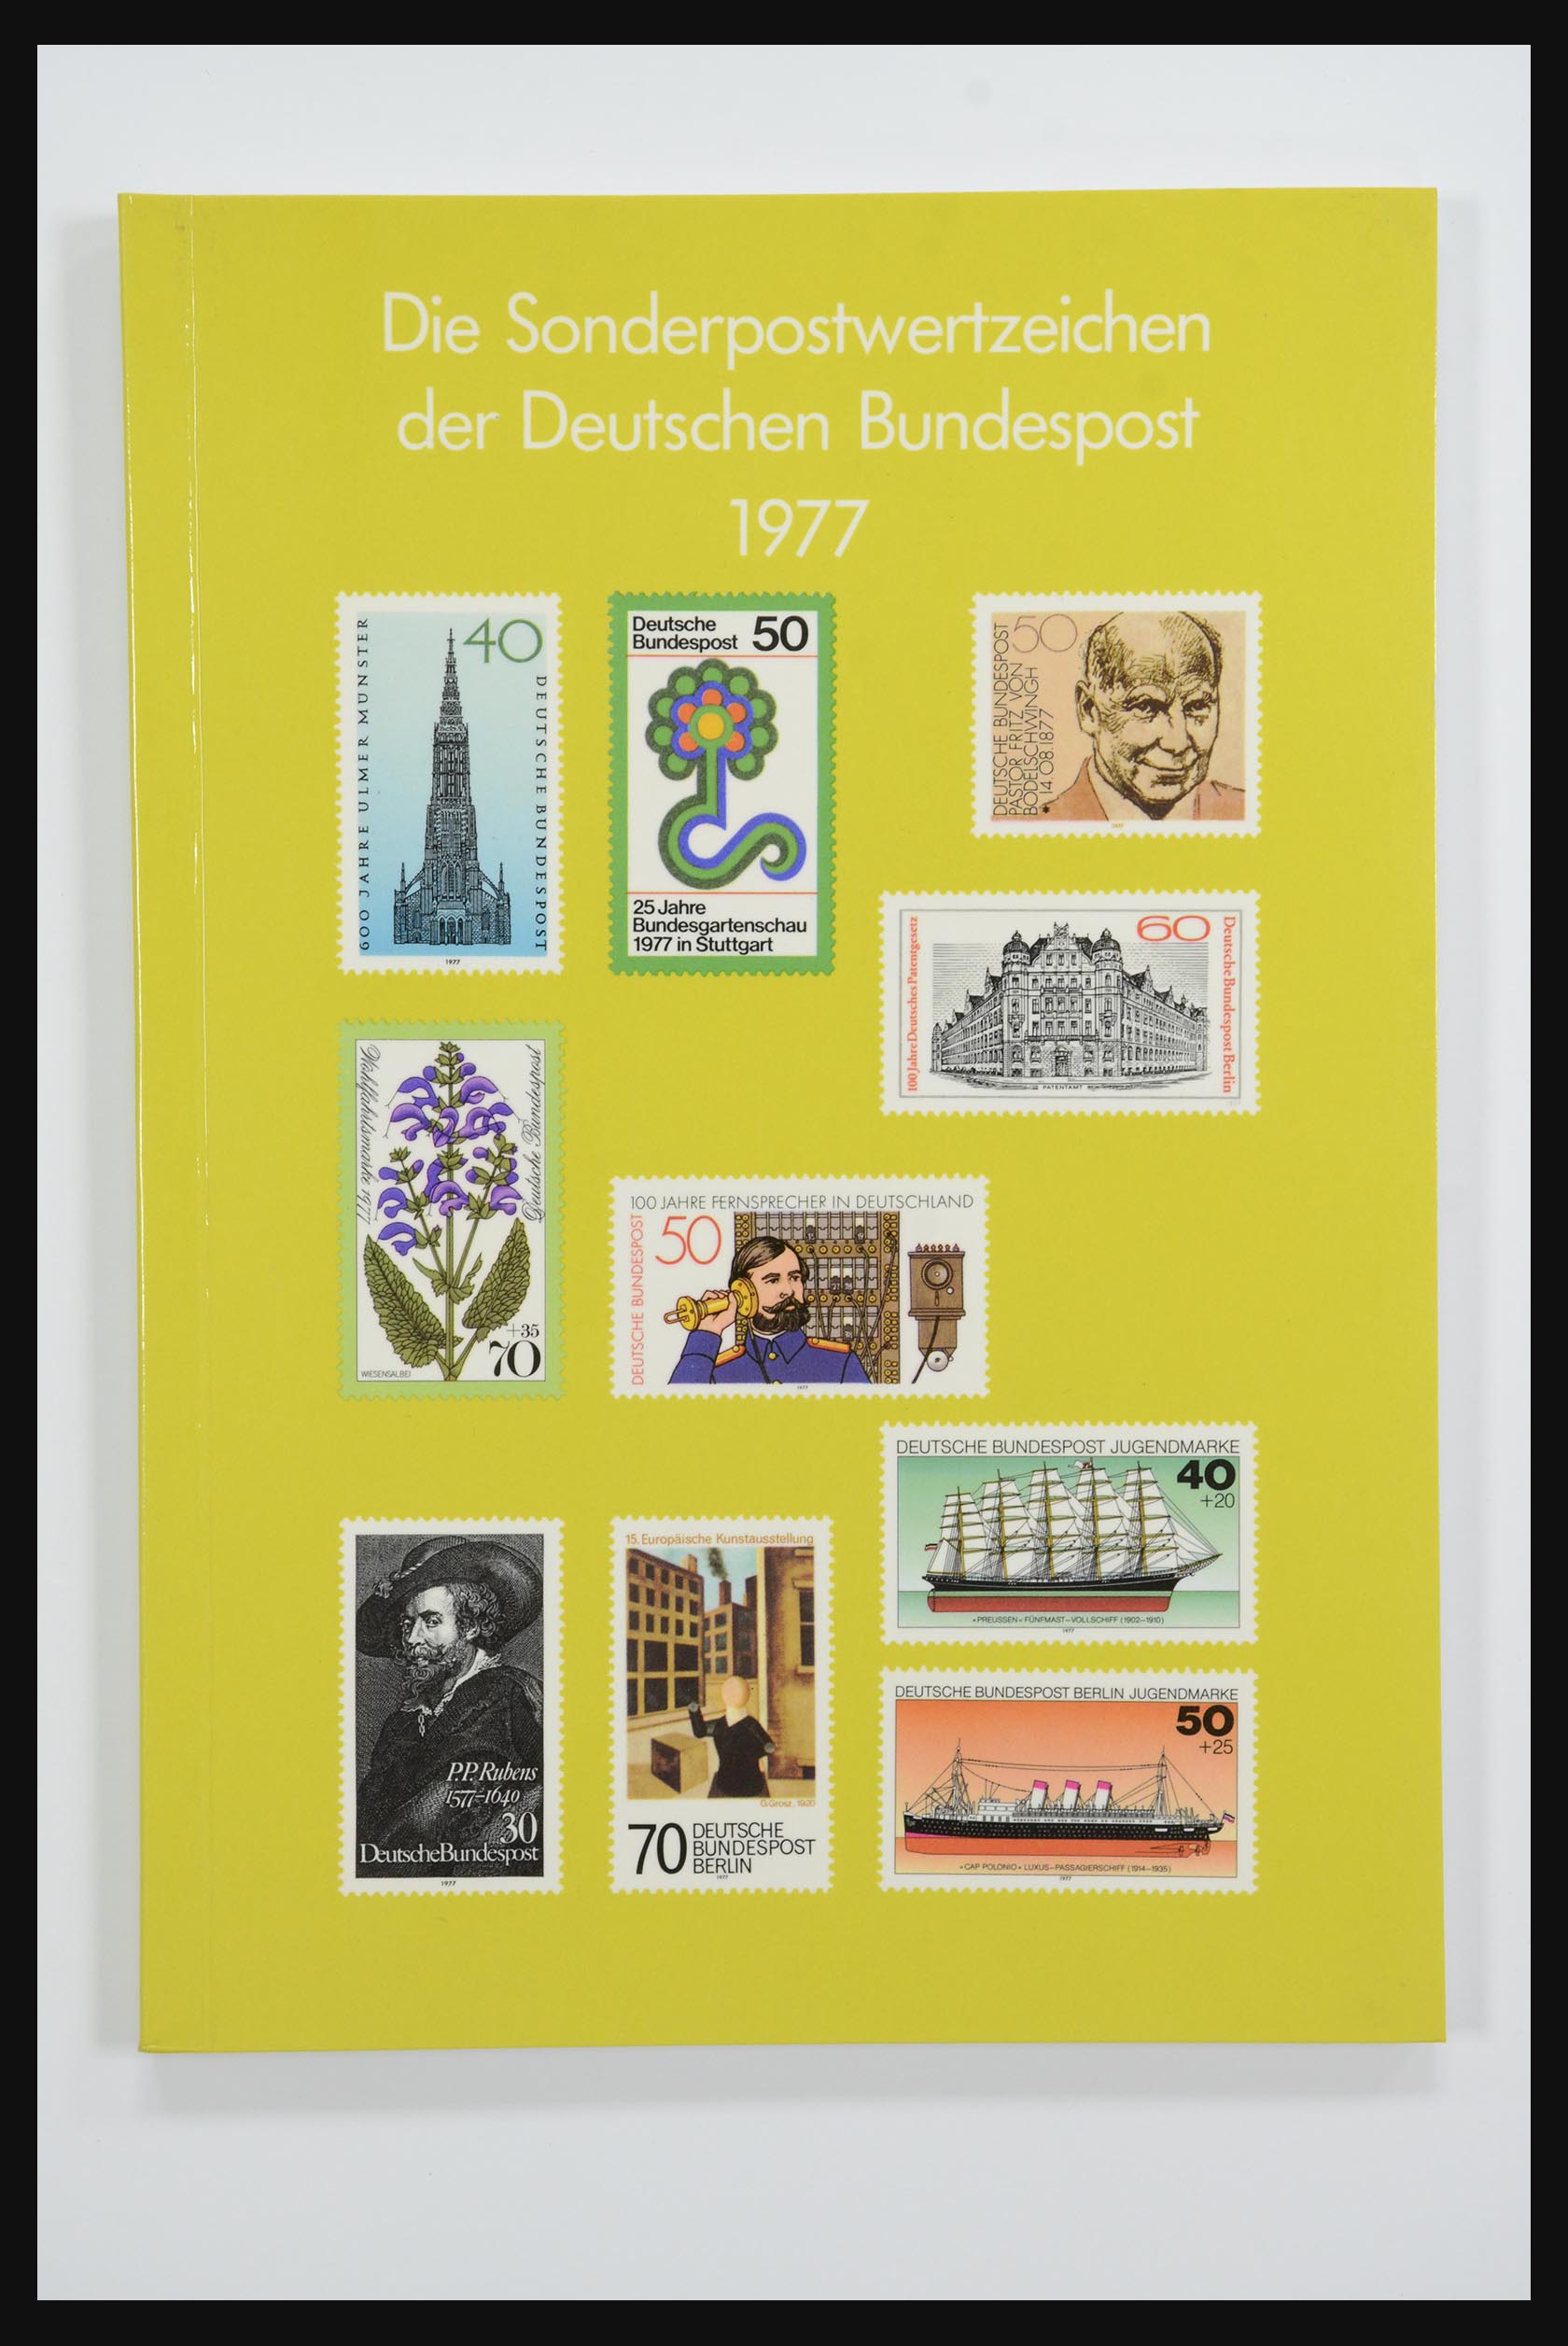 31836 005 - 31836 Bundespost yearbooks 1974-1999.